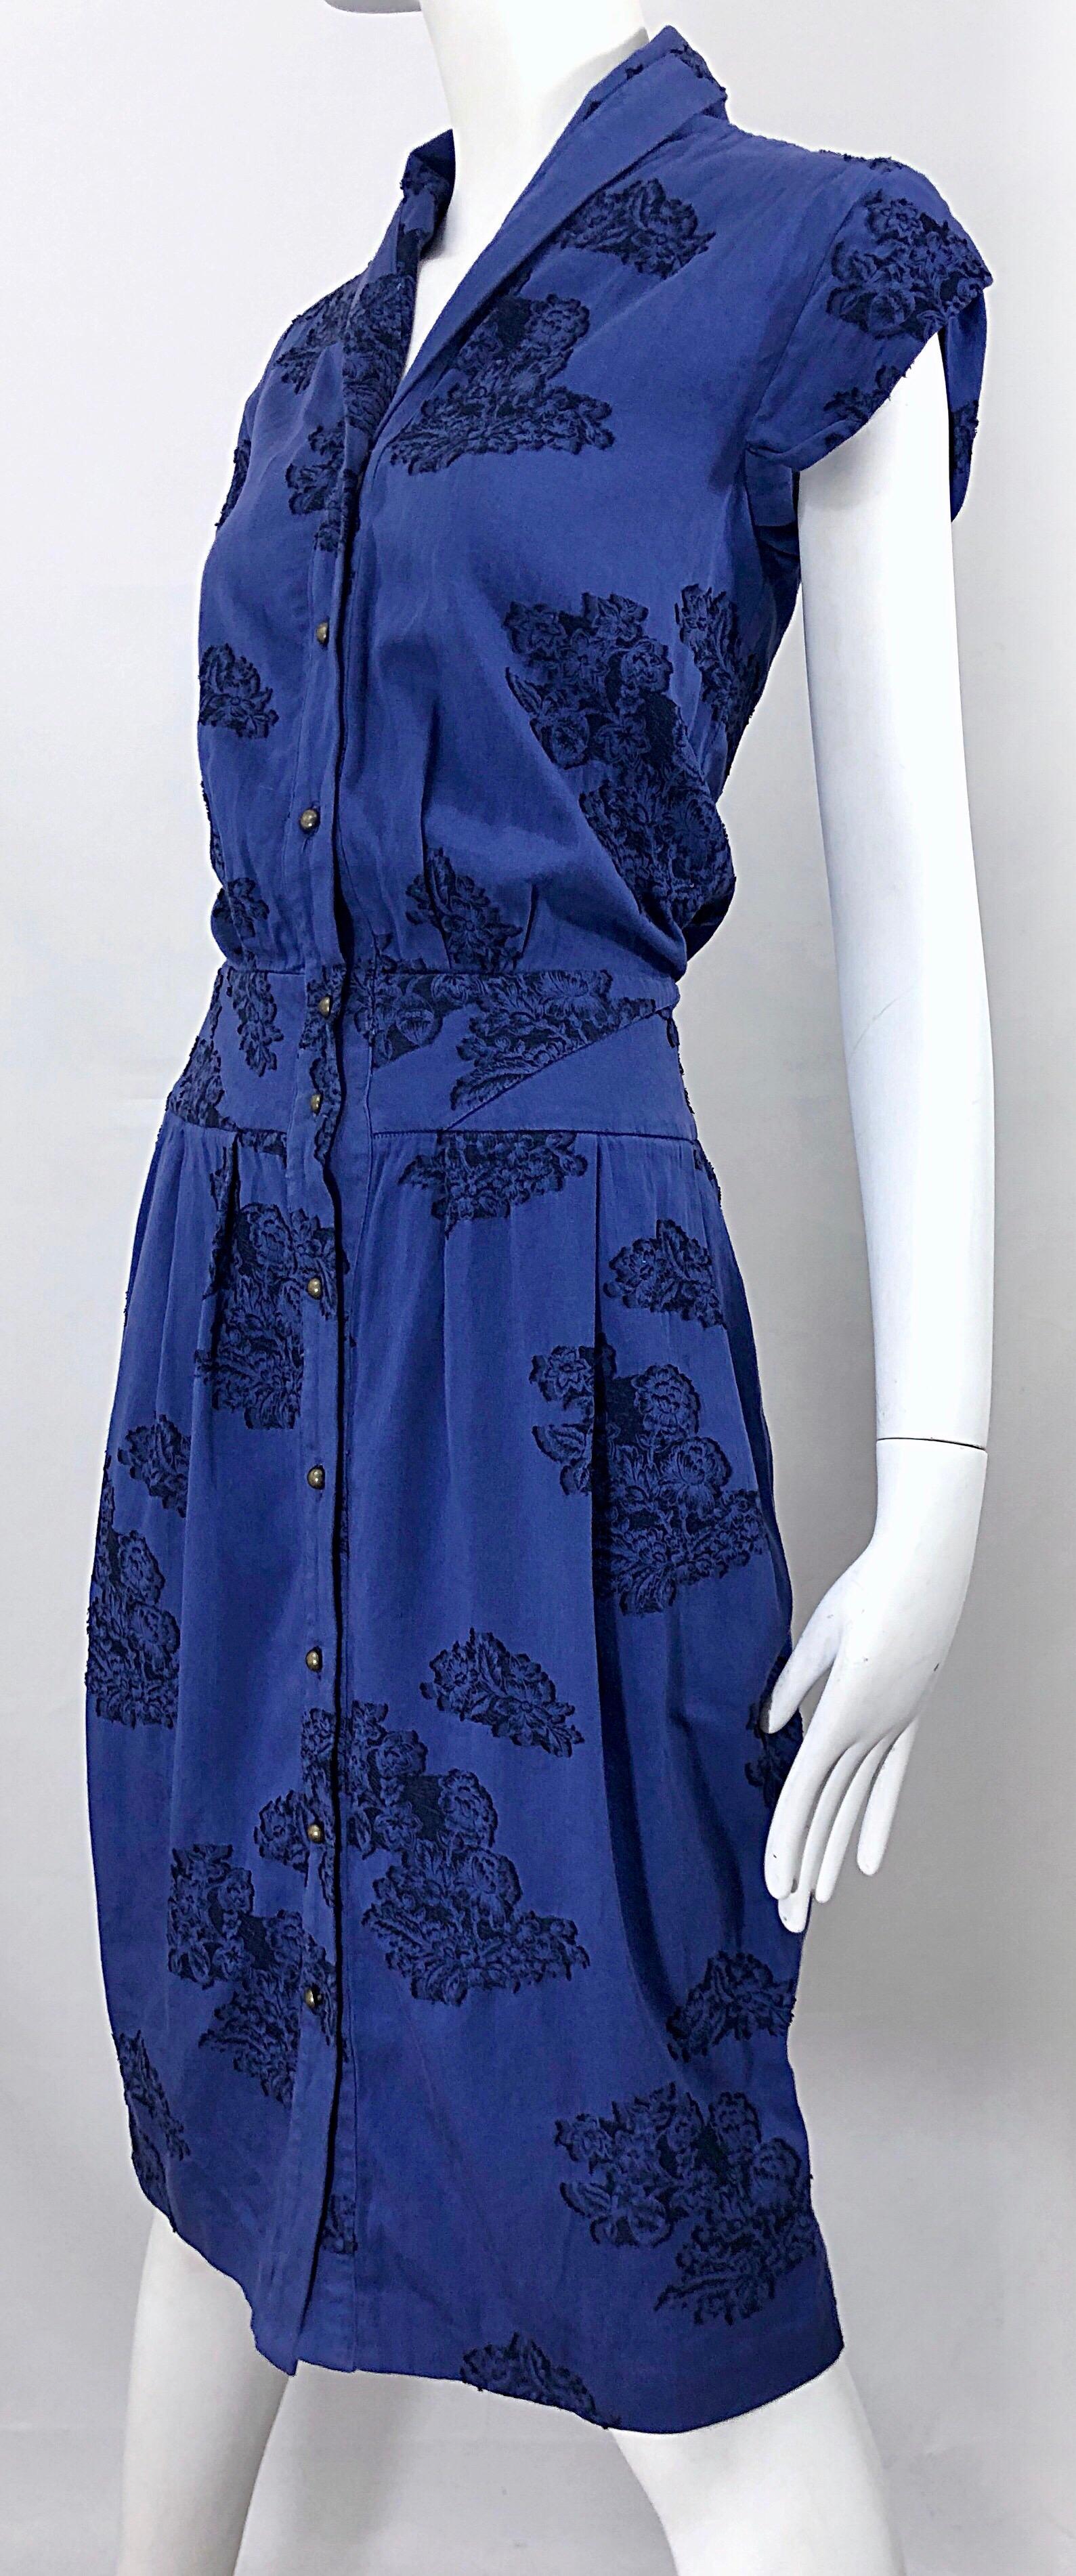 Women's Alexander McQueen Blue + Black Lace Print Size 40 1950s Style Bustle Dress